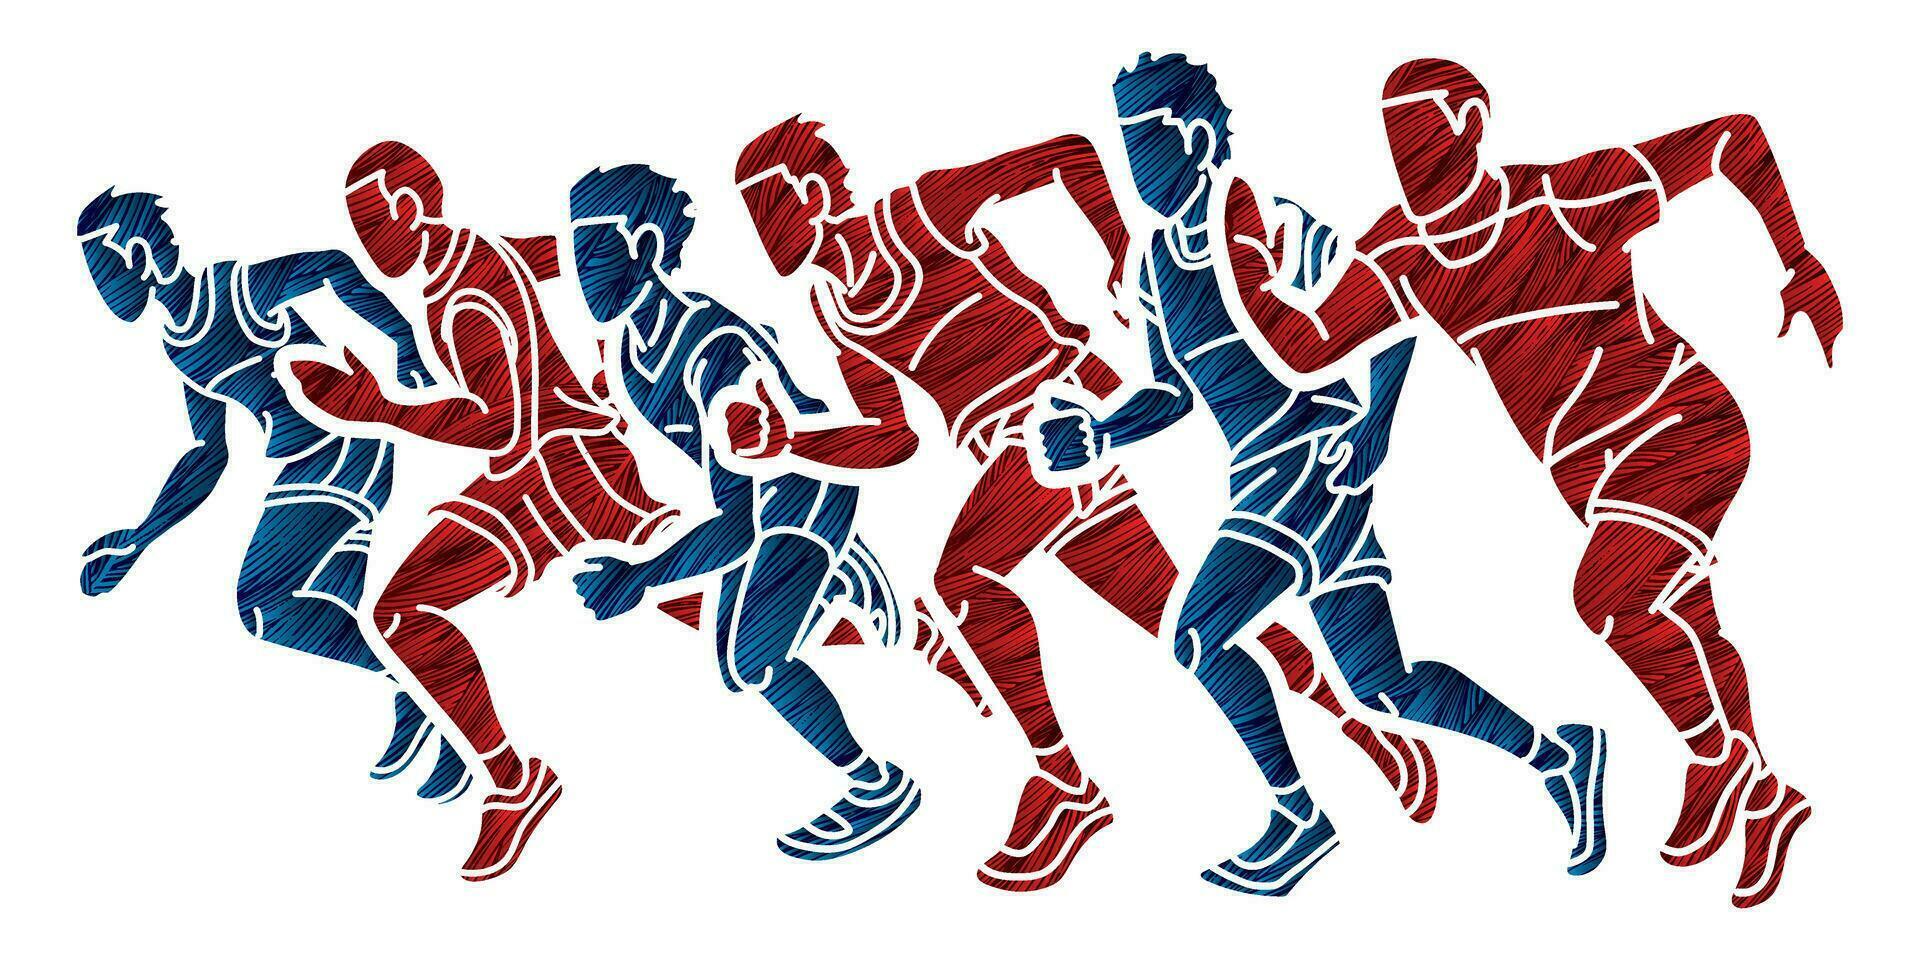 Group of Runner Action Start Running Men Run Together Cartoon Sport Graphic Vector